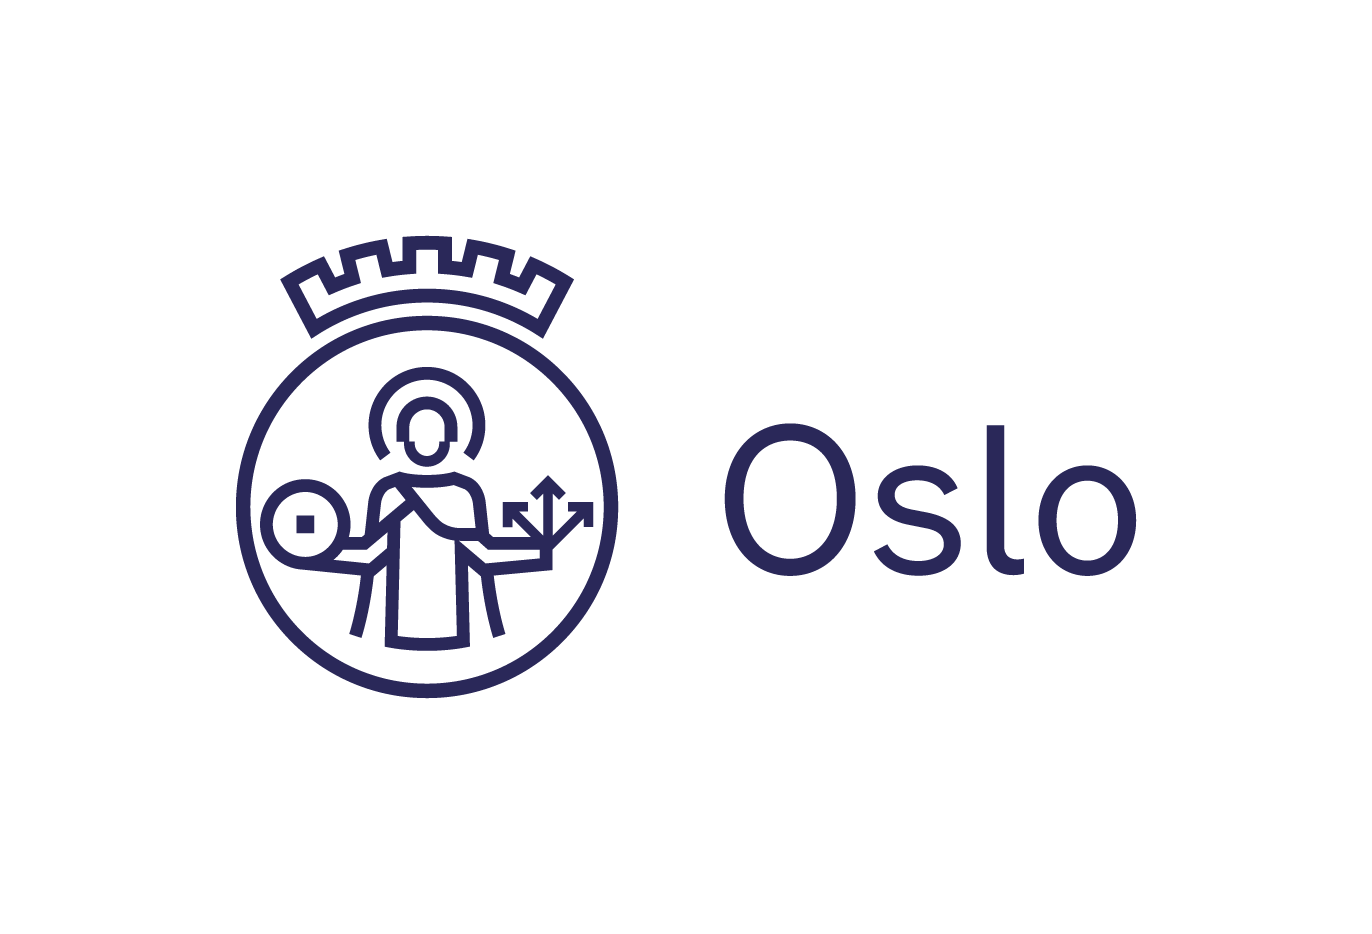 City of Oslo